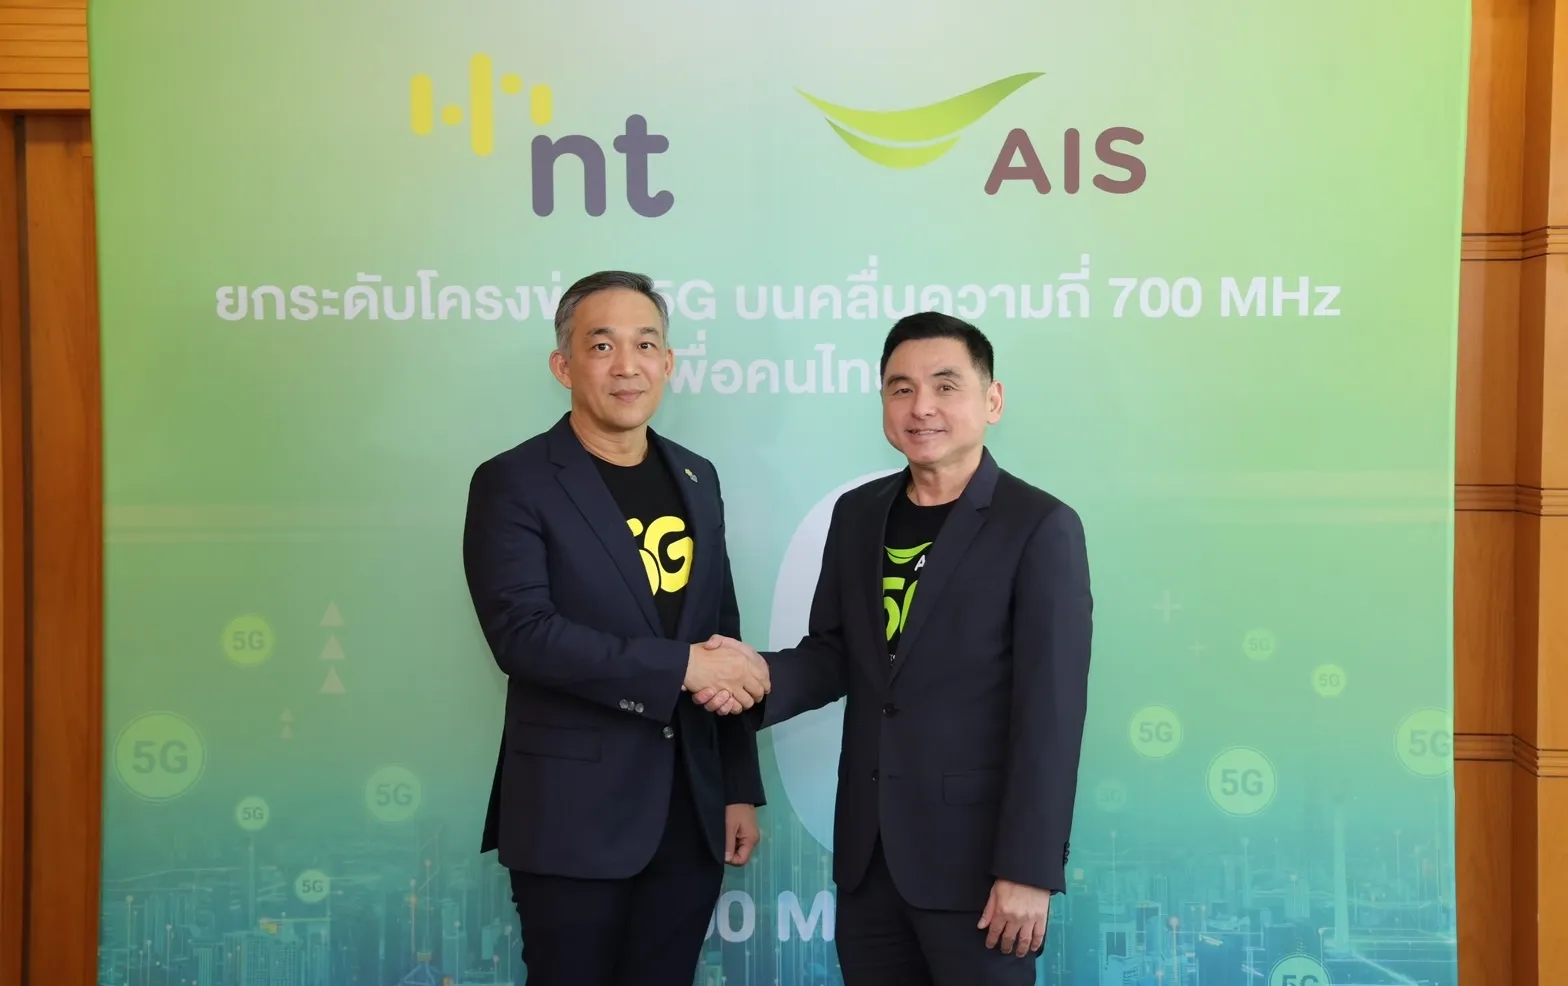 NT – AIS ผนึกกำลังครั้งสำคัญ เสริมขีดความสามารถ 4G/5G บนคลื่น 700 MHz 
มุ่งยกระดับโครงสร้างพื้นฐานดิจิทัลของประเทศ ต่อยอดนวัตกรรมโครงข่ายอัจฉริยะเพื่อคนไทย